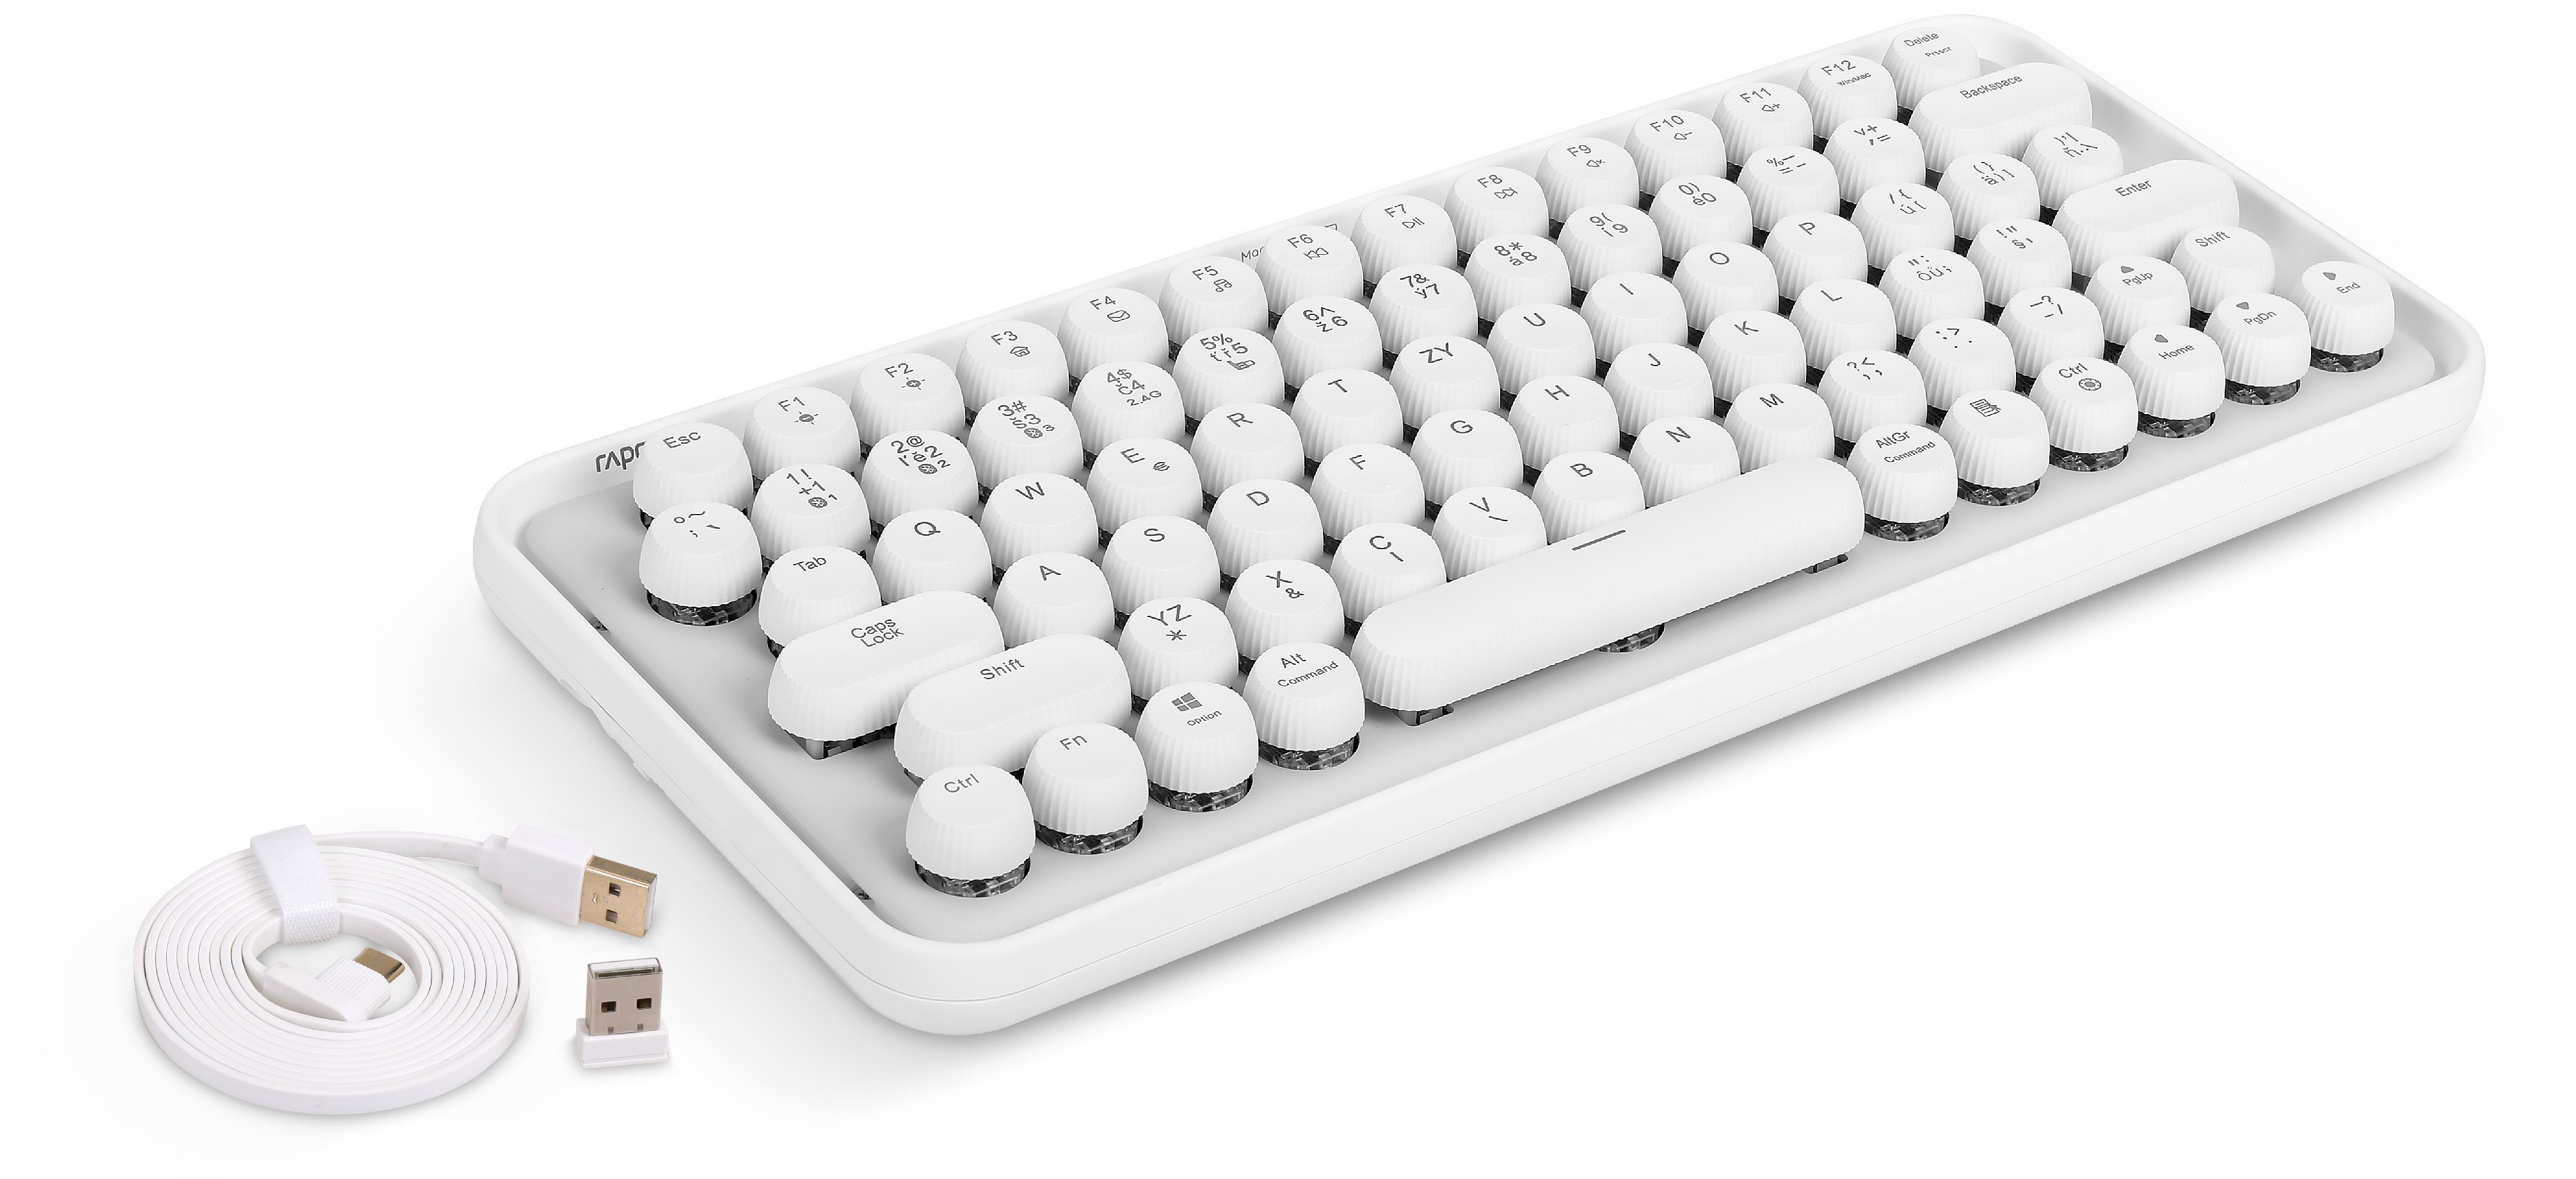 Keyboard Rapoo Ralemo Pre 5, White - CZ/SK Screen